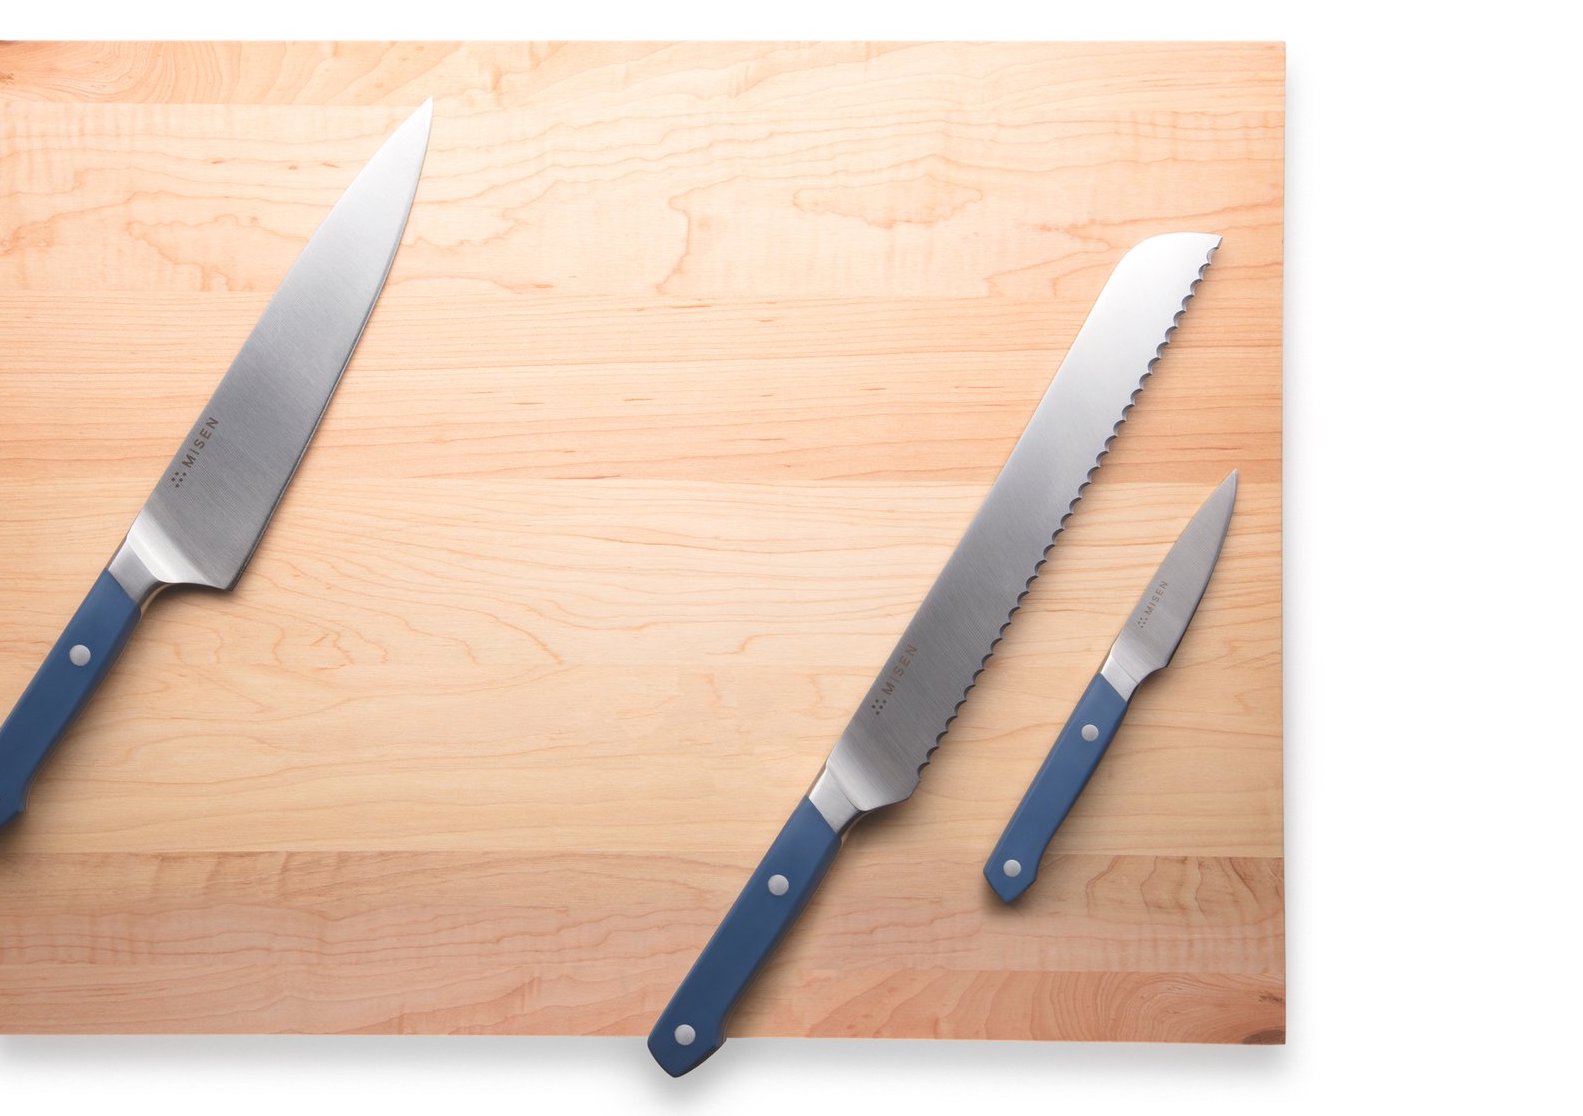 Good knife set: the Misen three-piece knife set on a cutting board